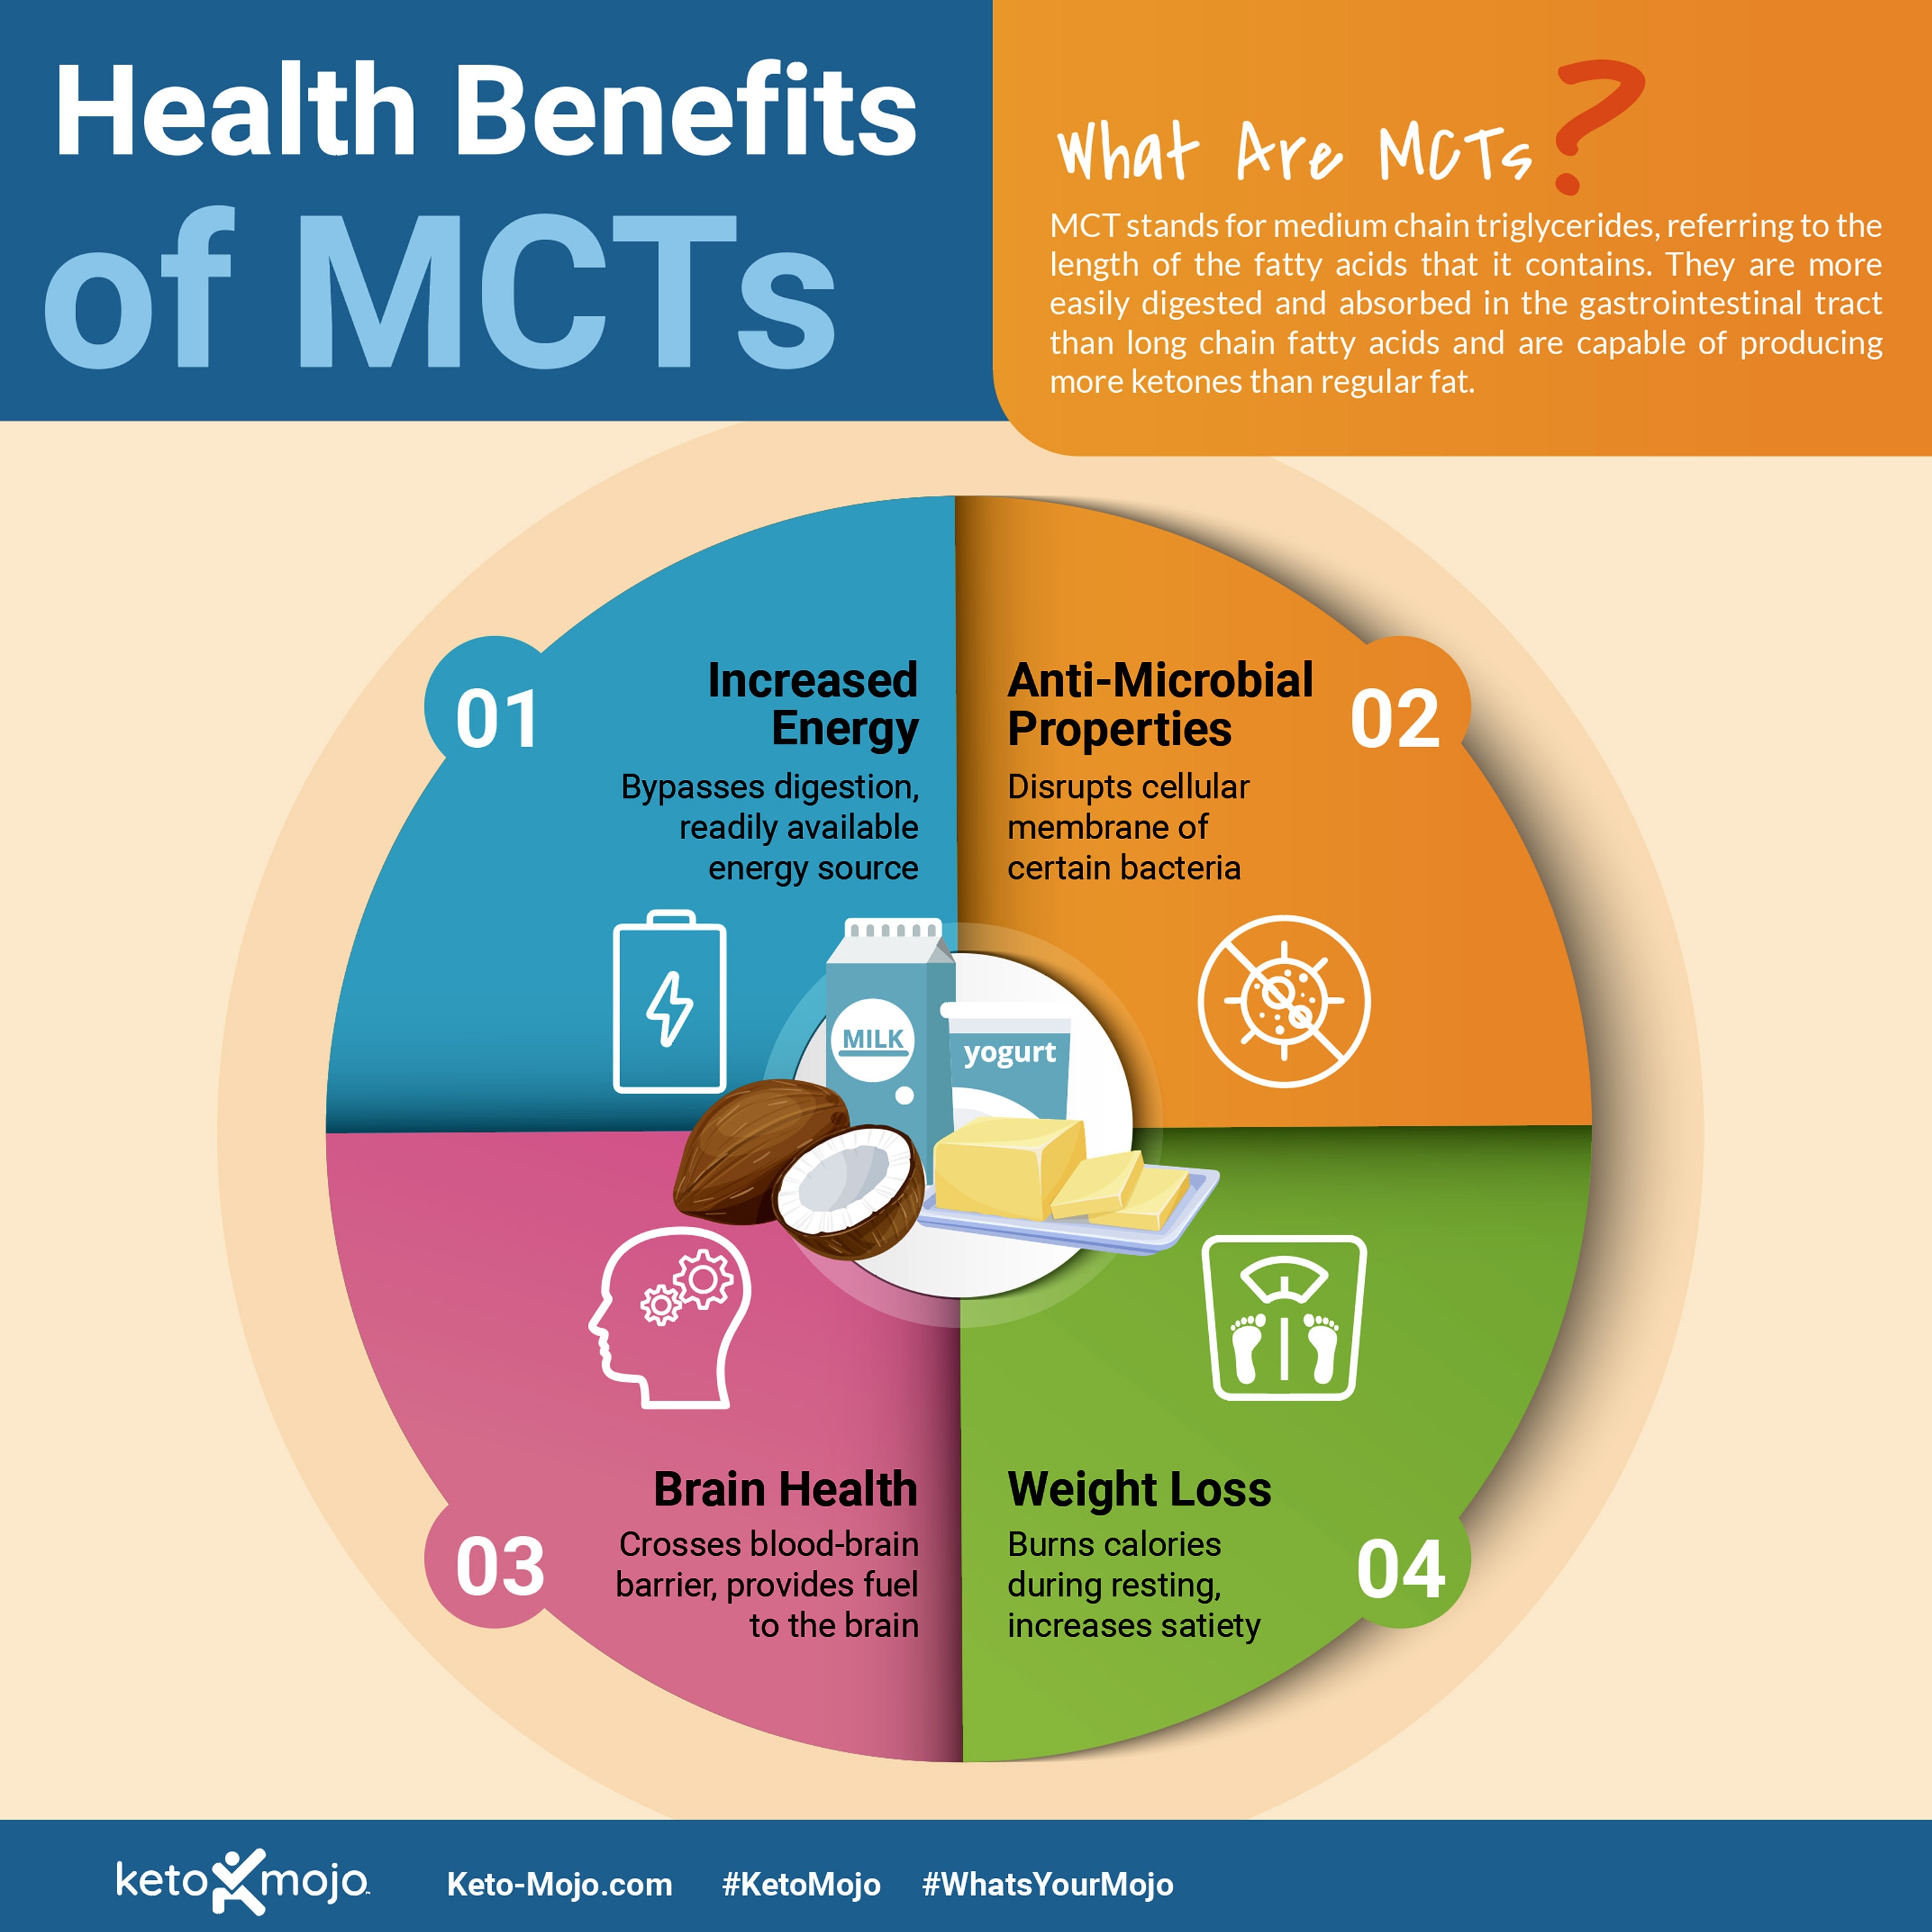 Keto-Mojo: Health benefits of MCTs